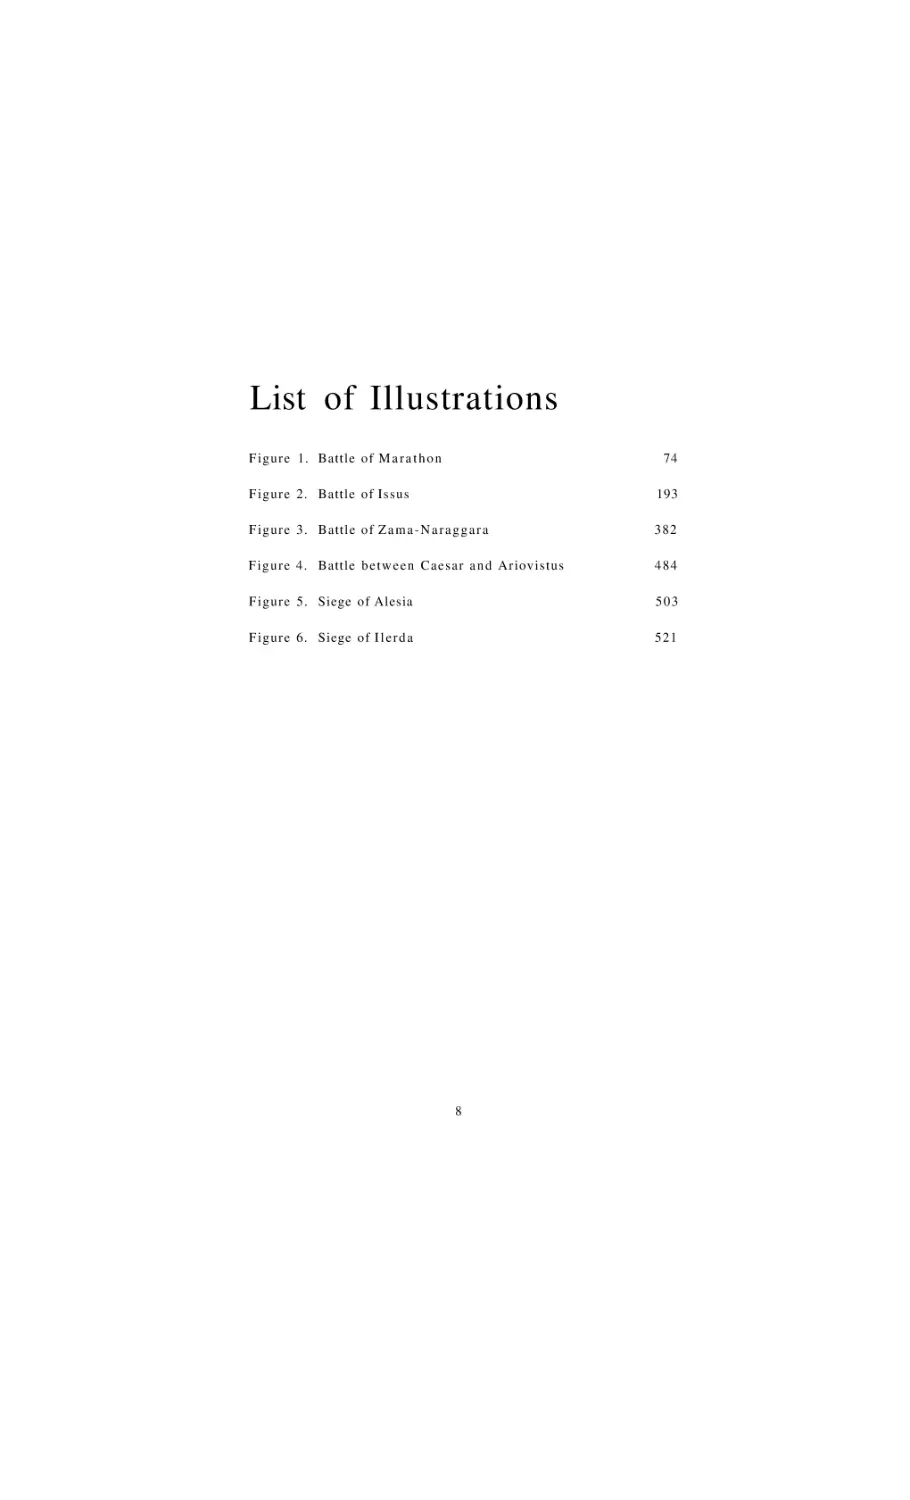 LIST OF ILLUSTRATIONS